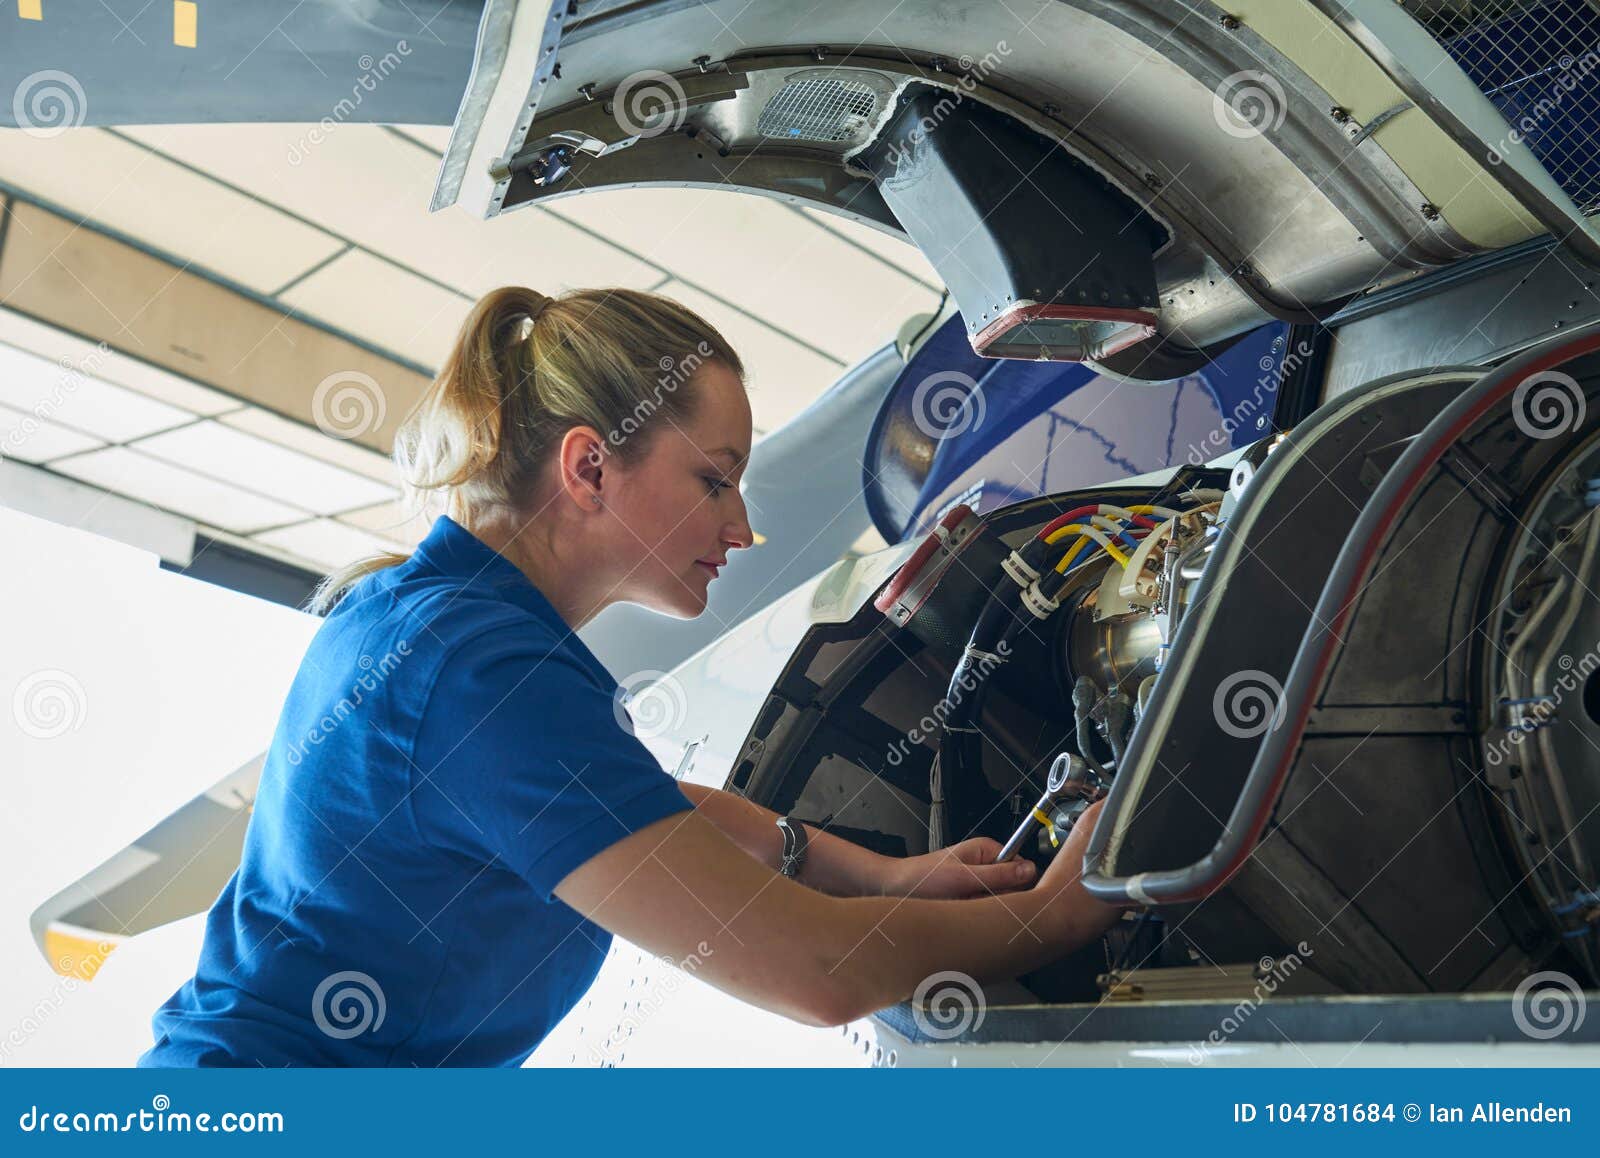 female aero engineer working on helicopter in hangar